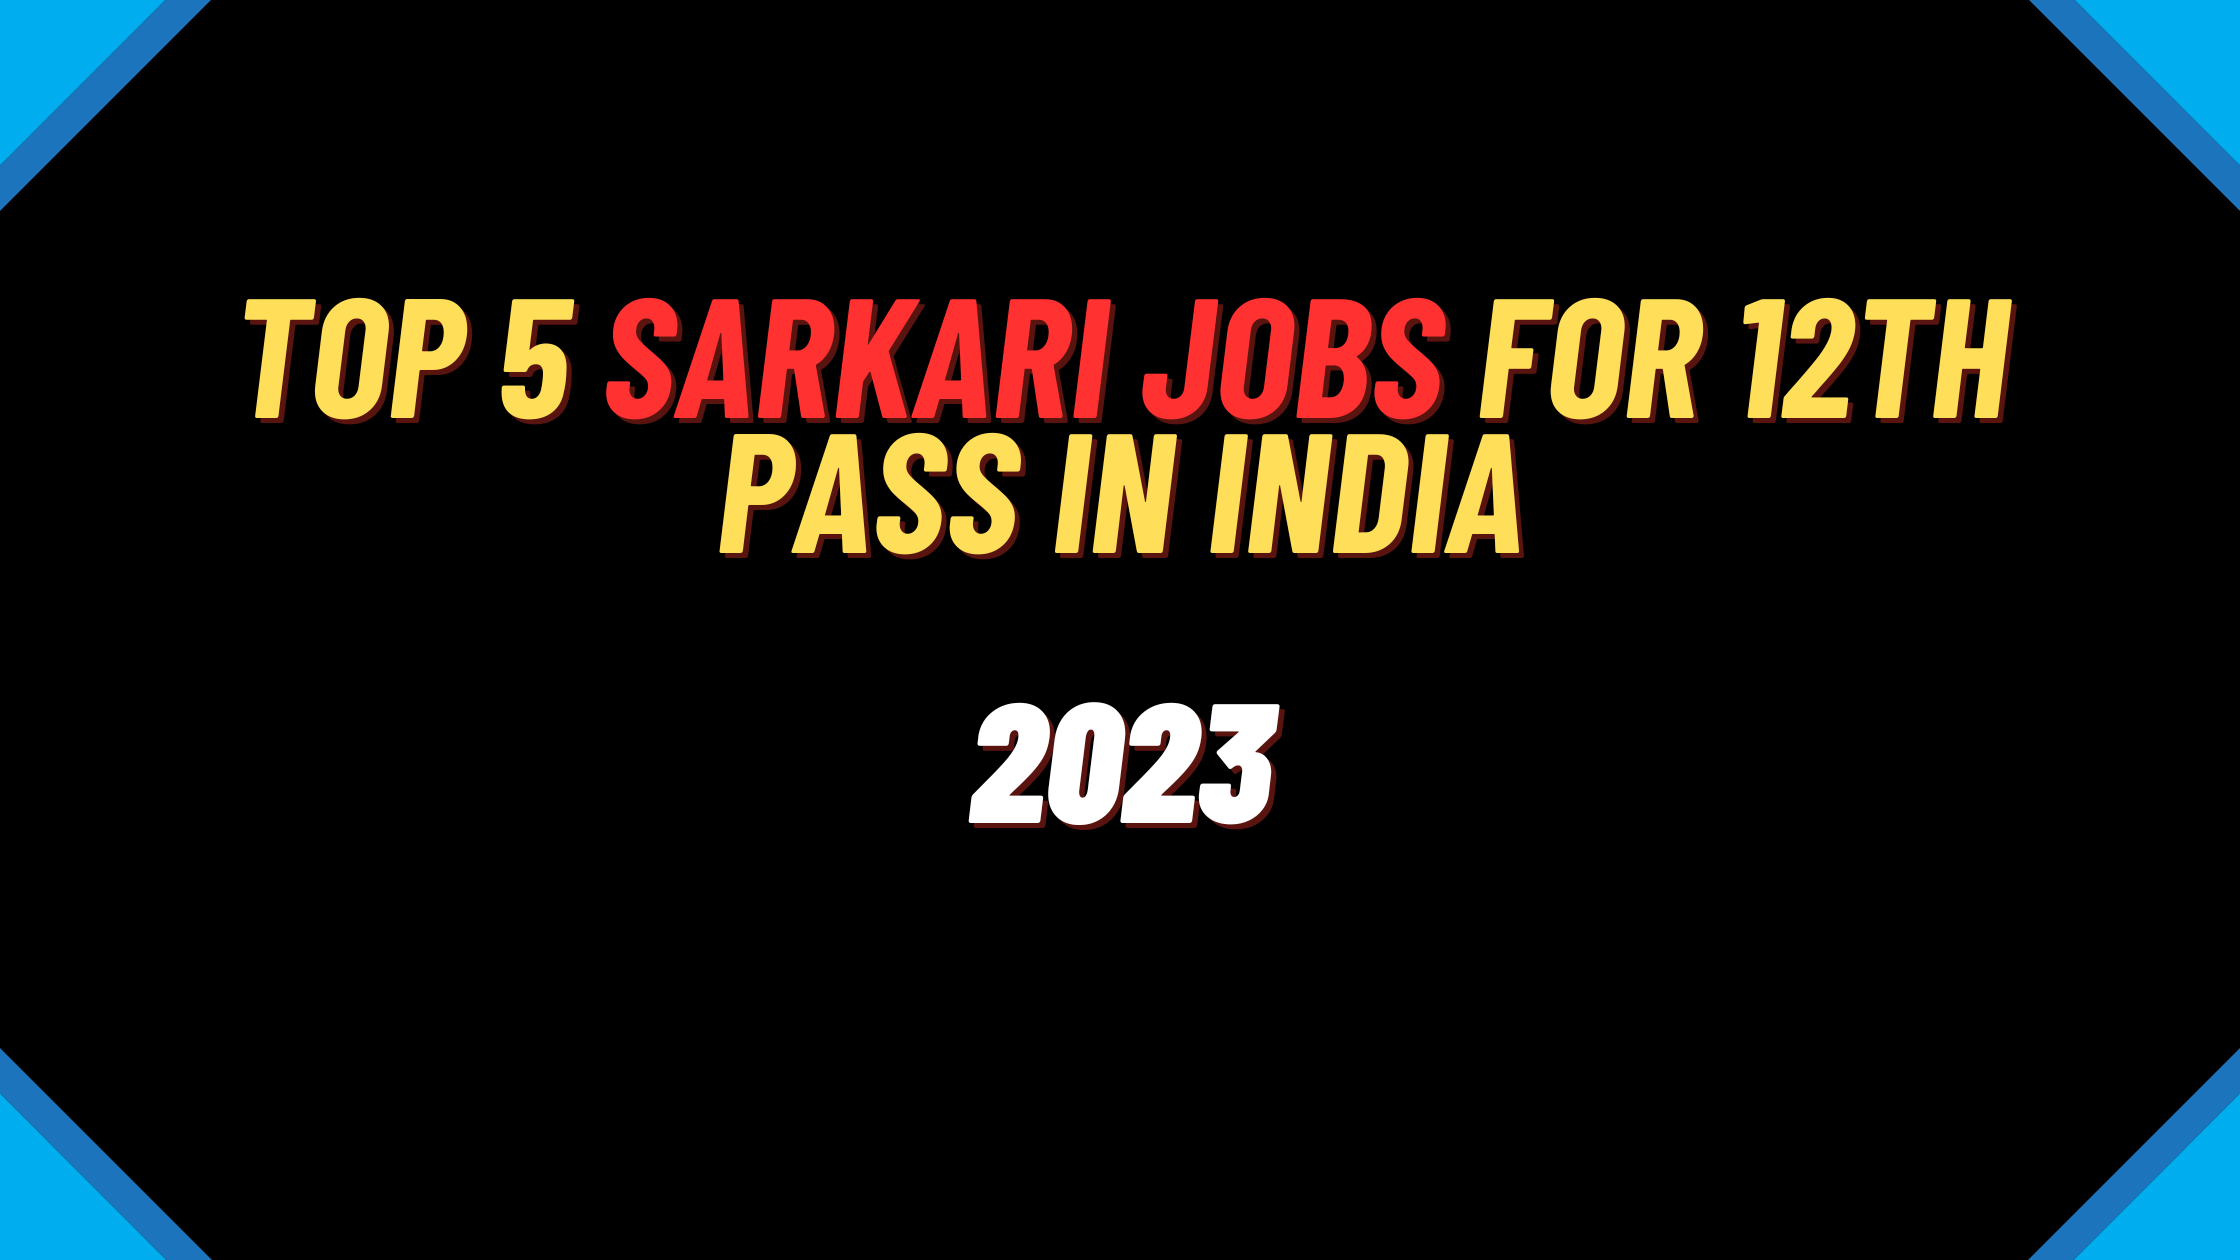 Top 5 Sarkari Jobs for 12th Pass in India 2023